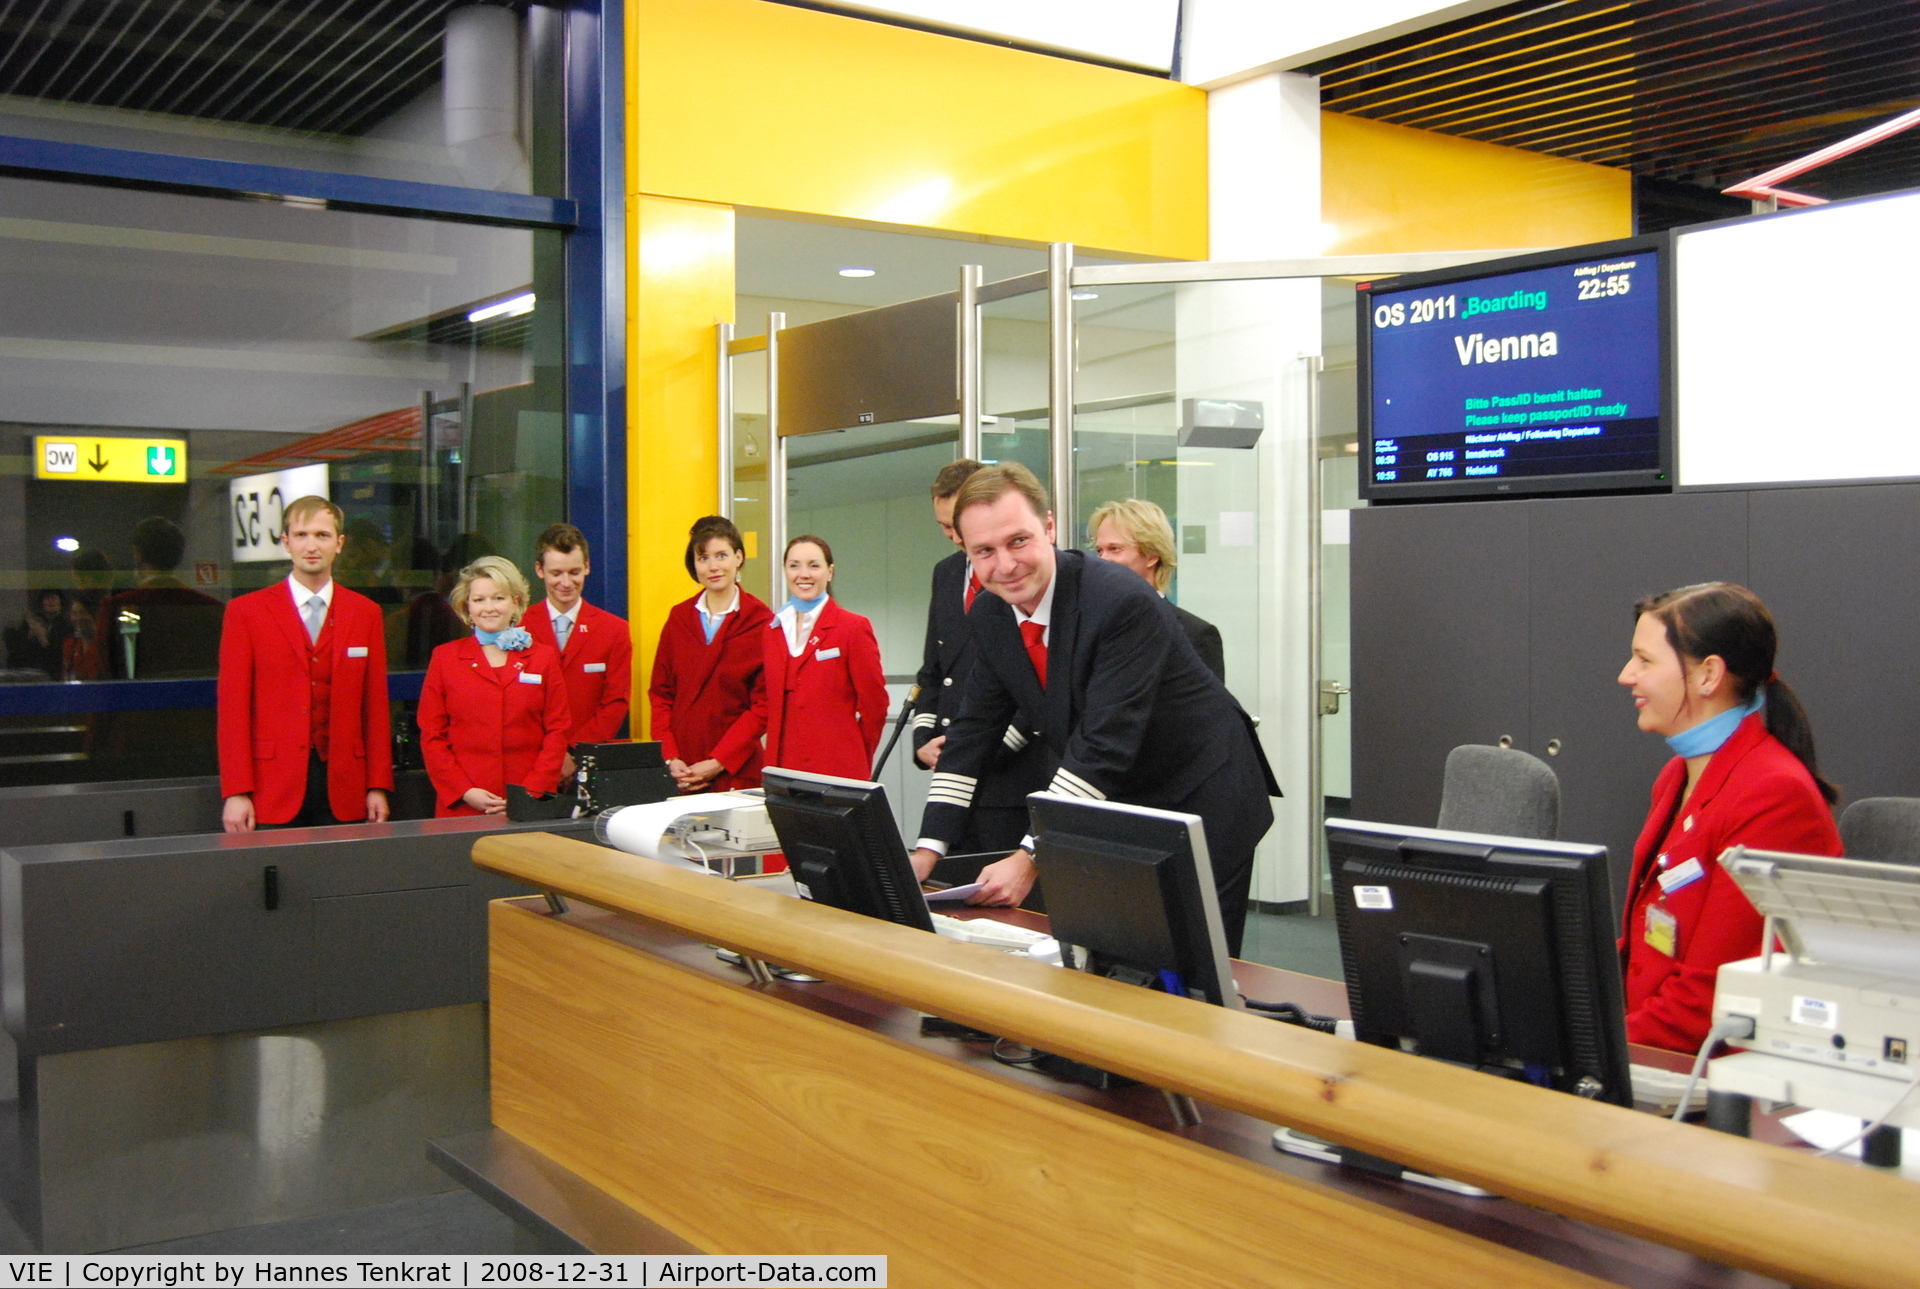 Vienna International Airport, Vienna Austria (VIE) - The whole crew of Austrian Airlines flight OS2011 and the 